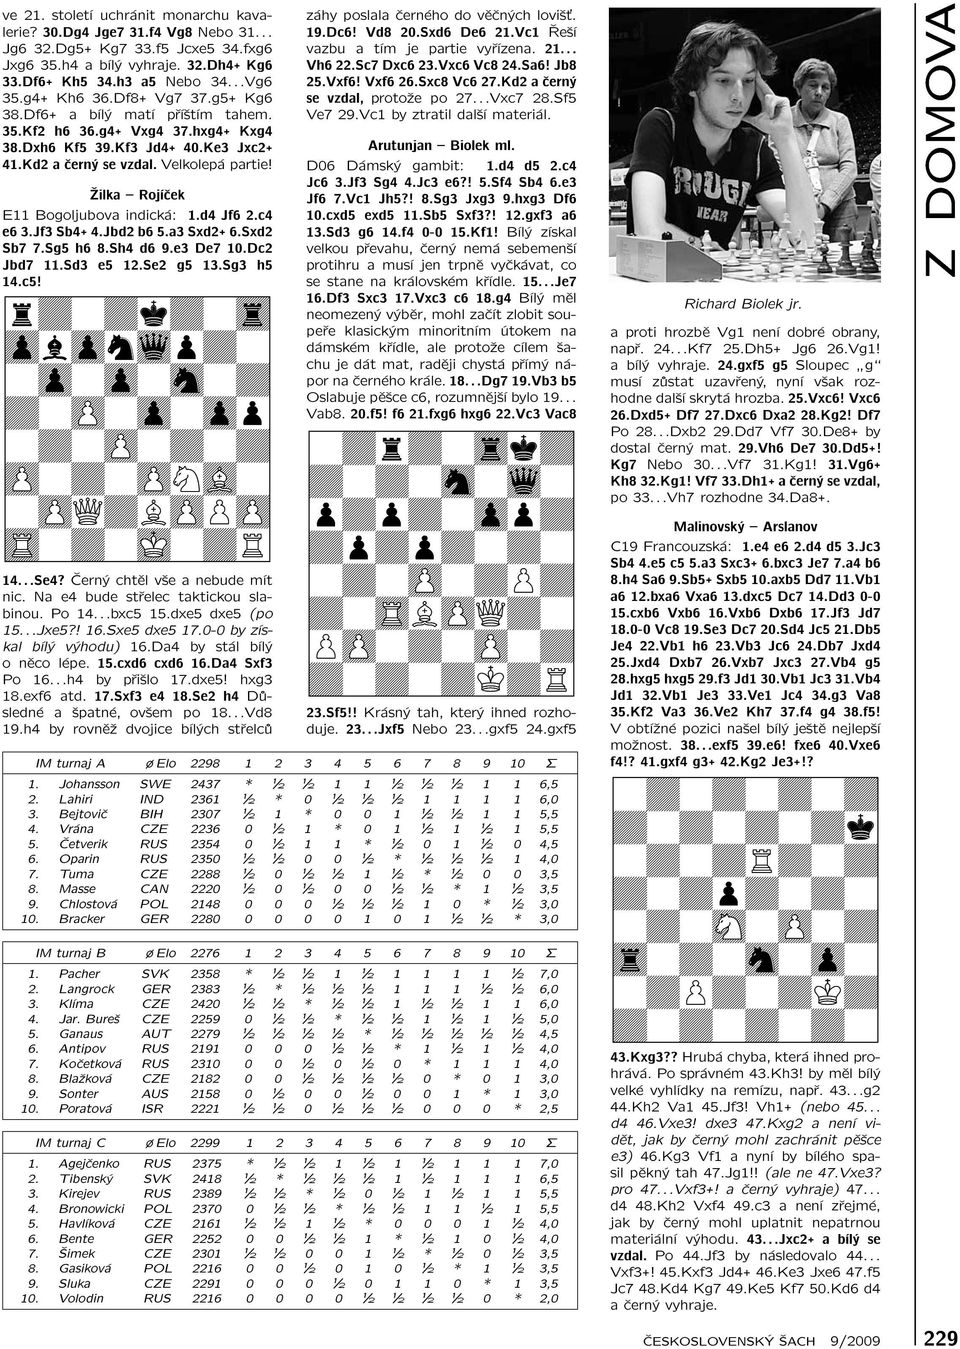 Žilka Rojíček E11 Bogoljubova indická: 1.d4 Jf6 2.c4 e6 3.Jf3 Sb4+ 4.Jbd2 b6 5.a3 Sxd2+ 6.Sxd2 Sb7 7.Sg5 h6 8.Sh4 d6 9.e3 De7 10.Dc2 Jbd7 11.Sd3 e5 12.Se2 g5 13.Sg3 h5 14.c5!